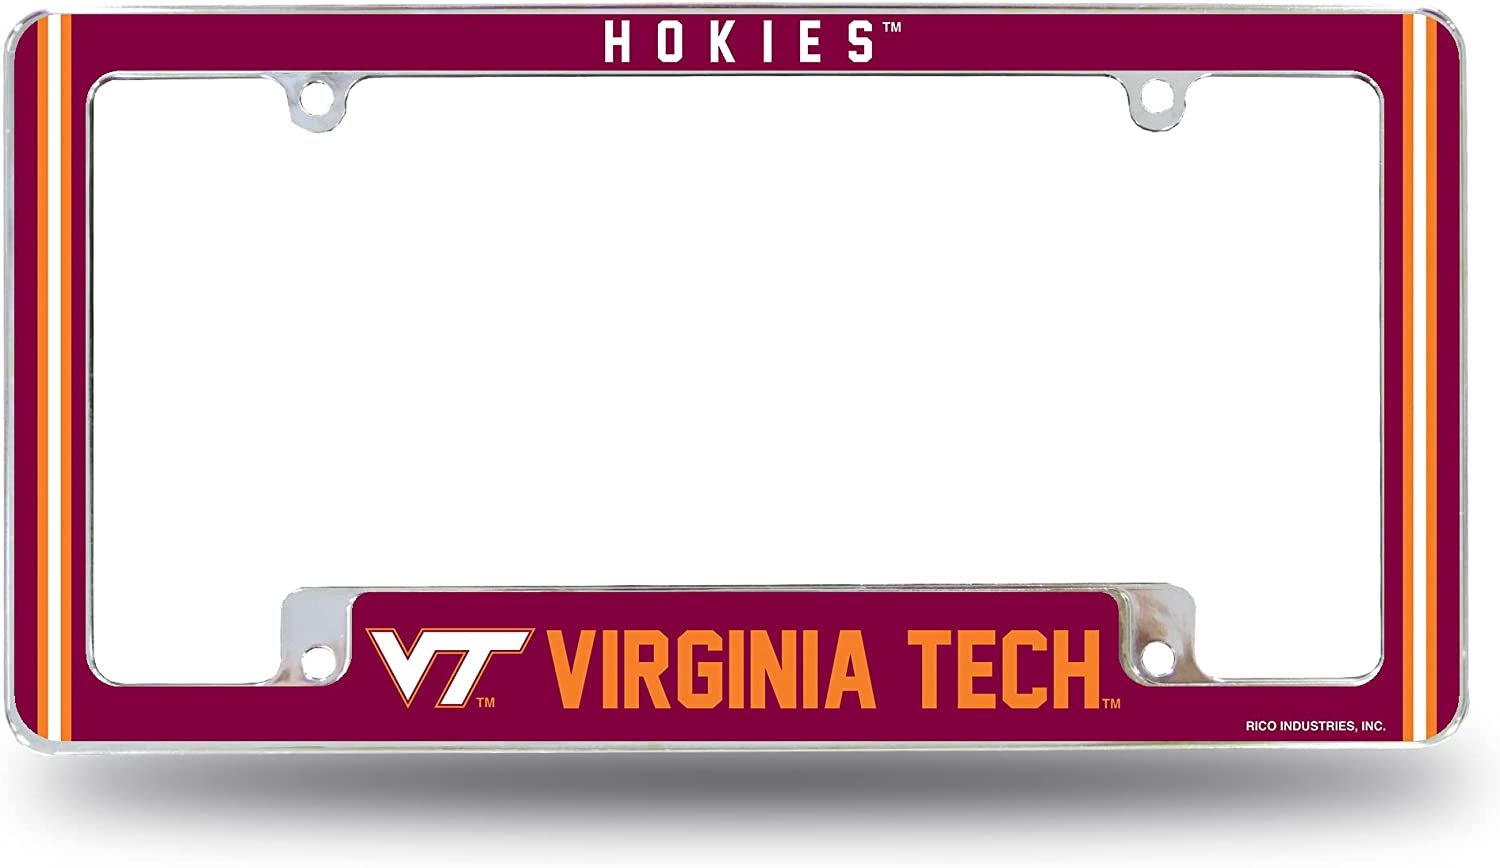 Virginia Tech Hokies Metal License Plate Frame Chrome Tag Cover Alternate Design 6x12 Inch